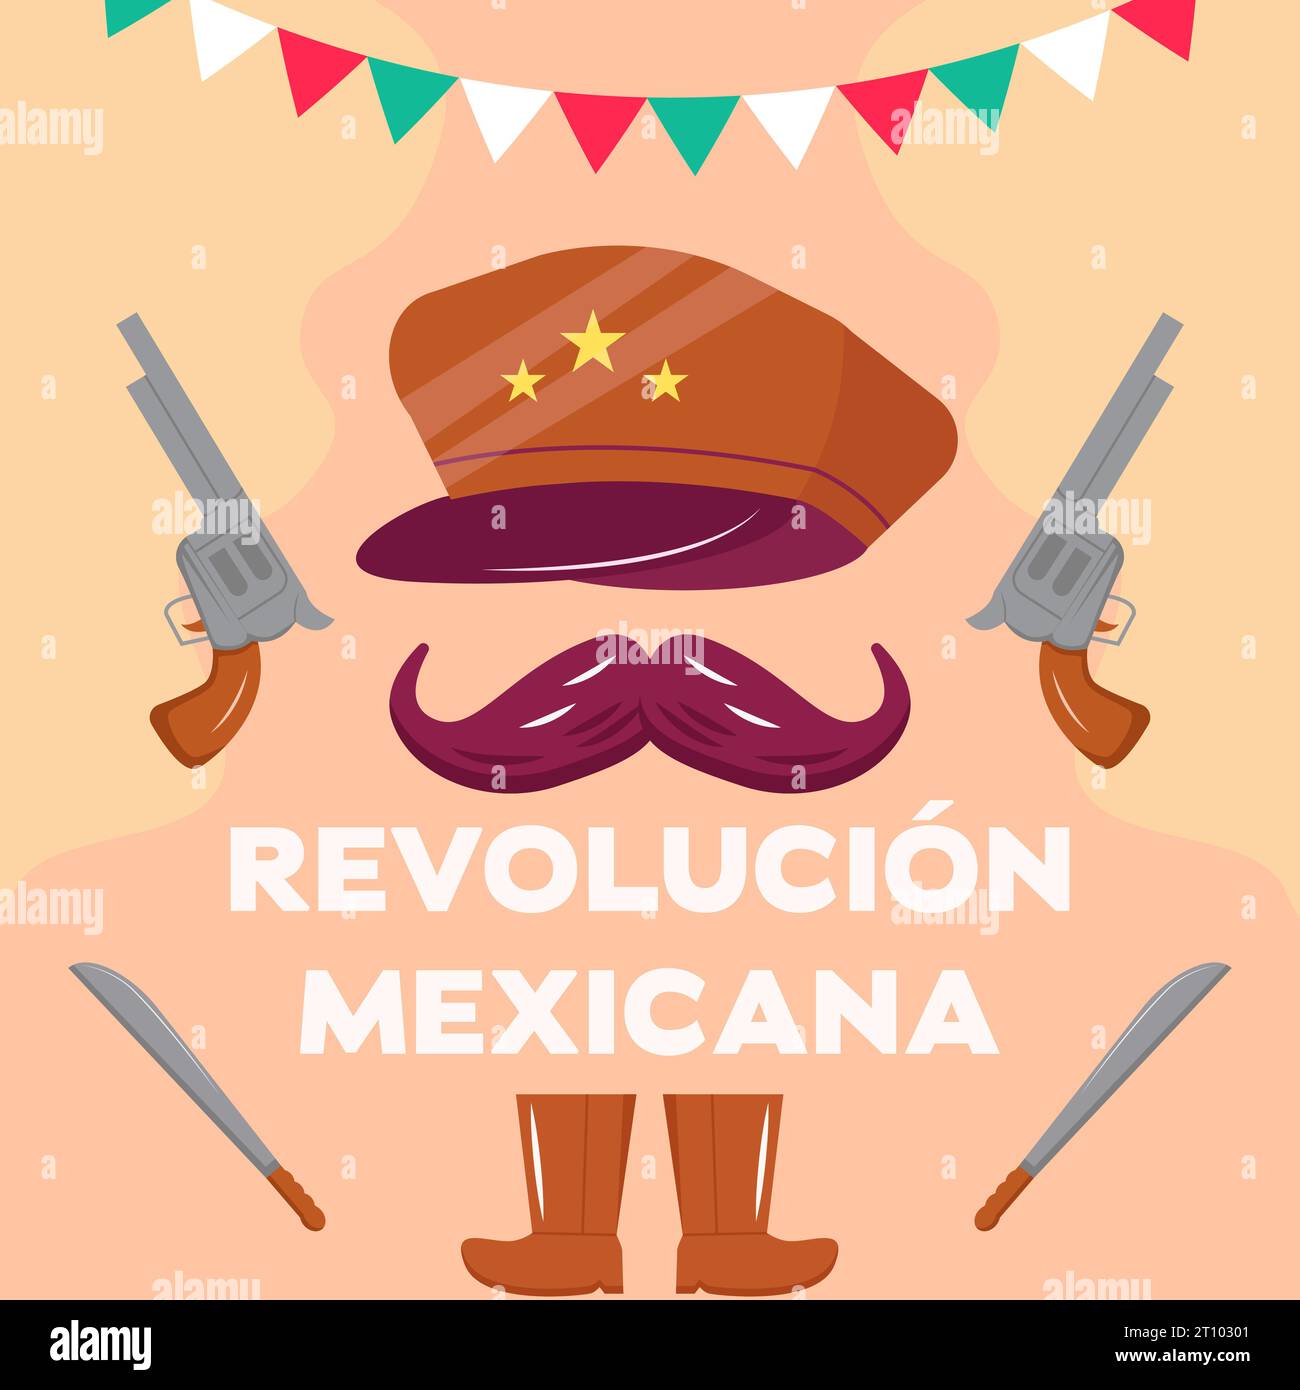 revolucion mexicana design concept illustration in flat style Stock Vector